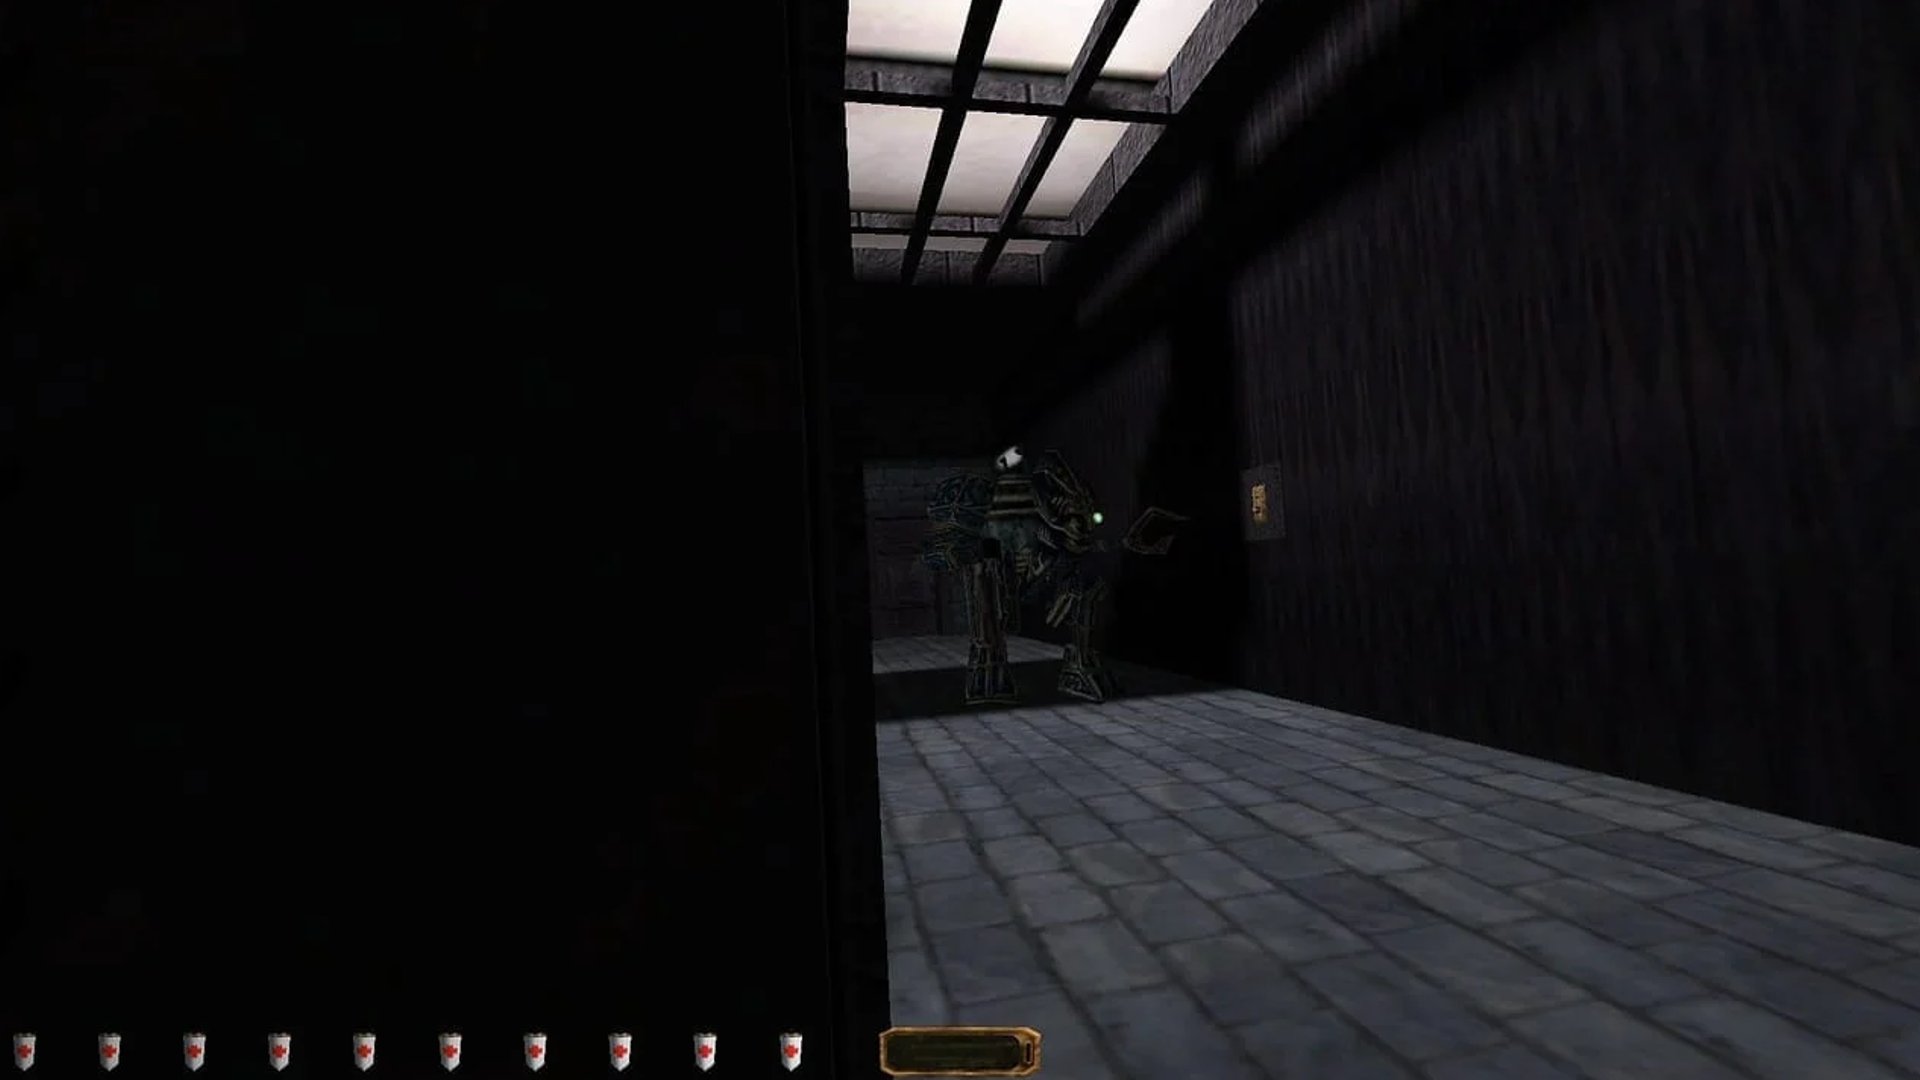 The player can be seen peeking around a corner